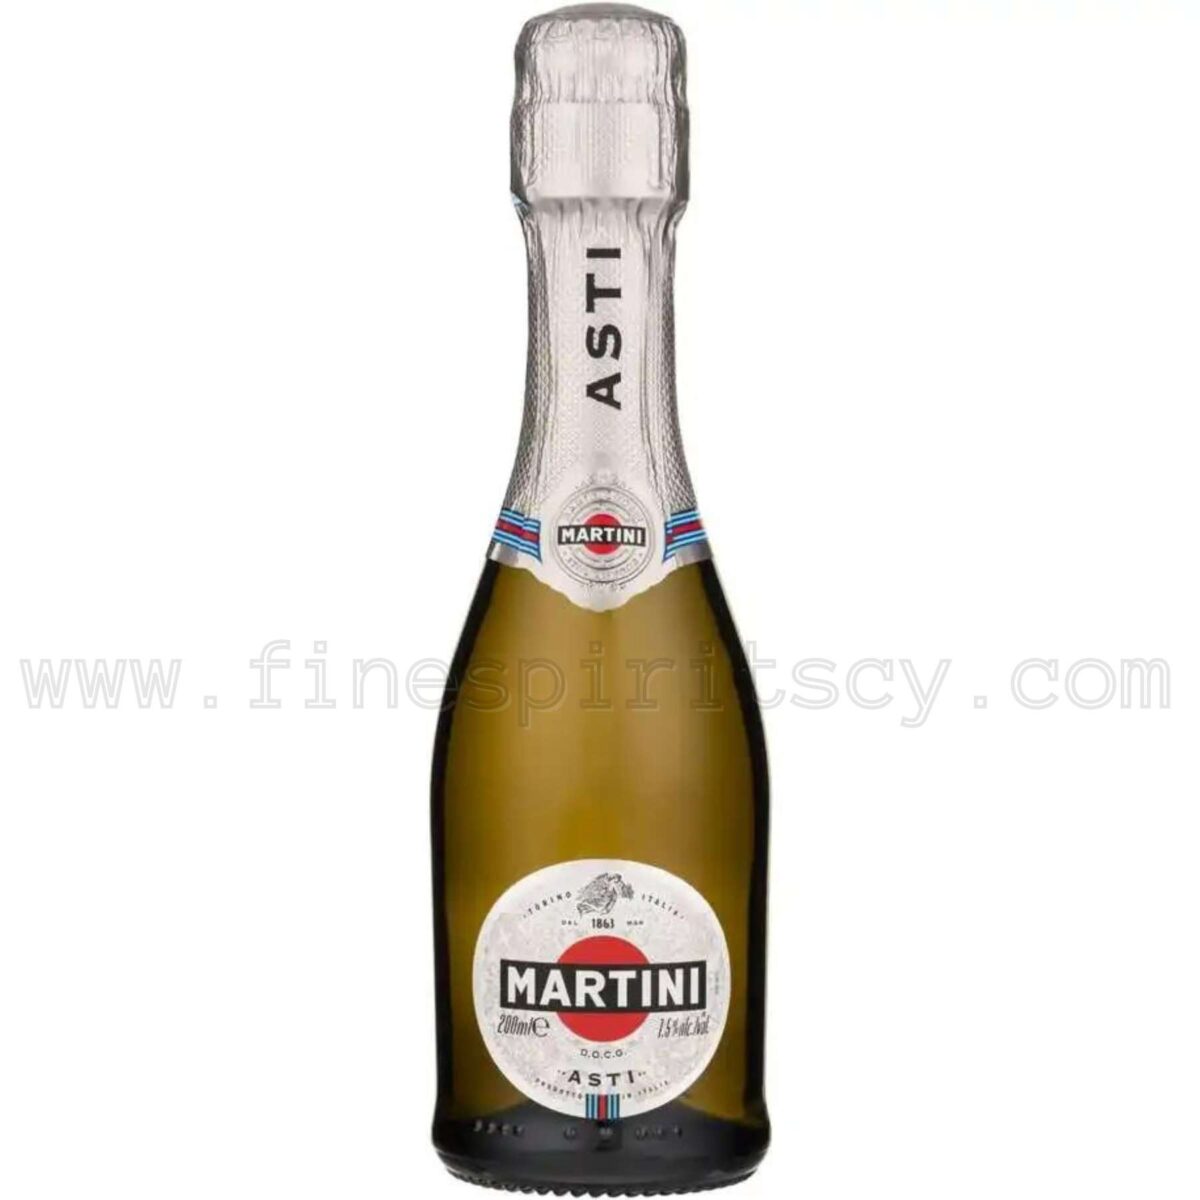 Martini Asti CY 200ml 0.2l Cyprus Wine Price Online Sparkling Order Buy 200ml